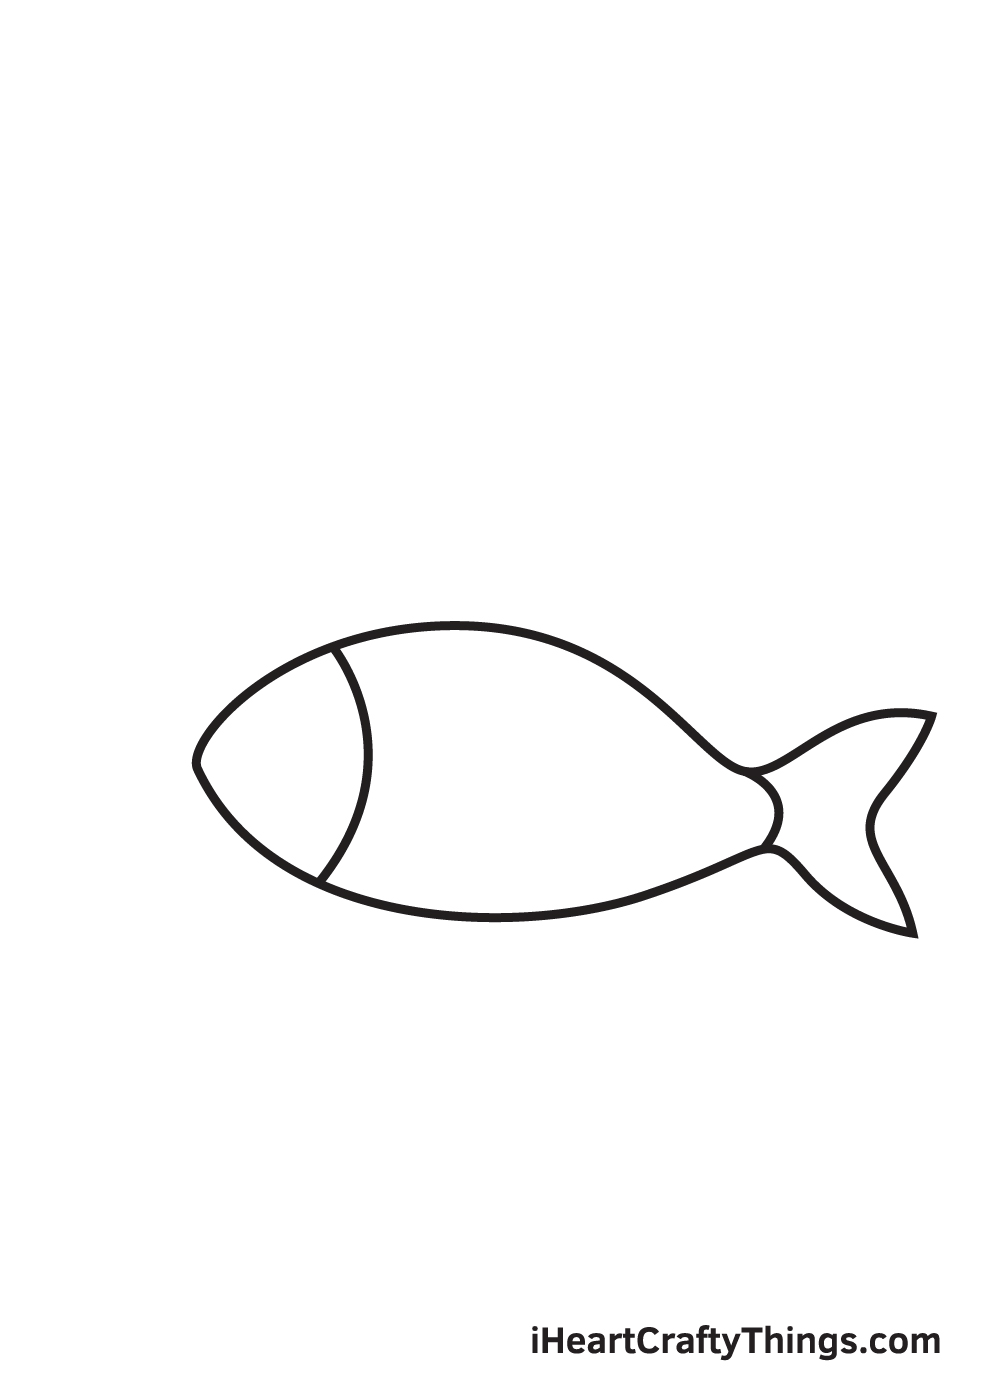 Spiny Dog Fish (outline) – The Zoologists Sketchbook